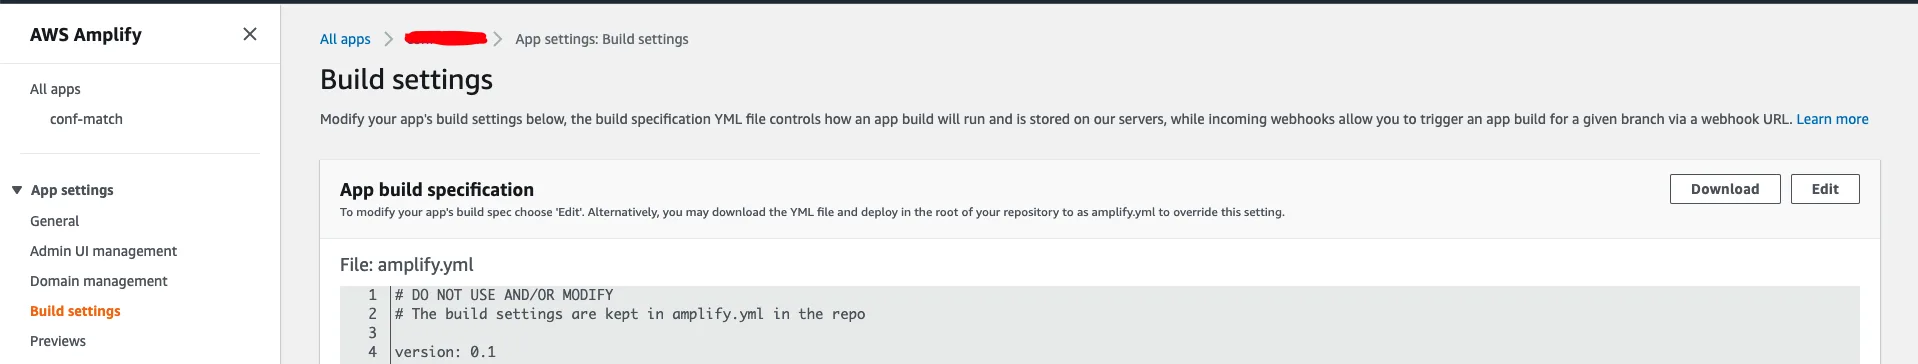 AWS Amplify build settings